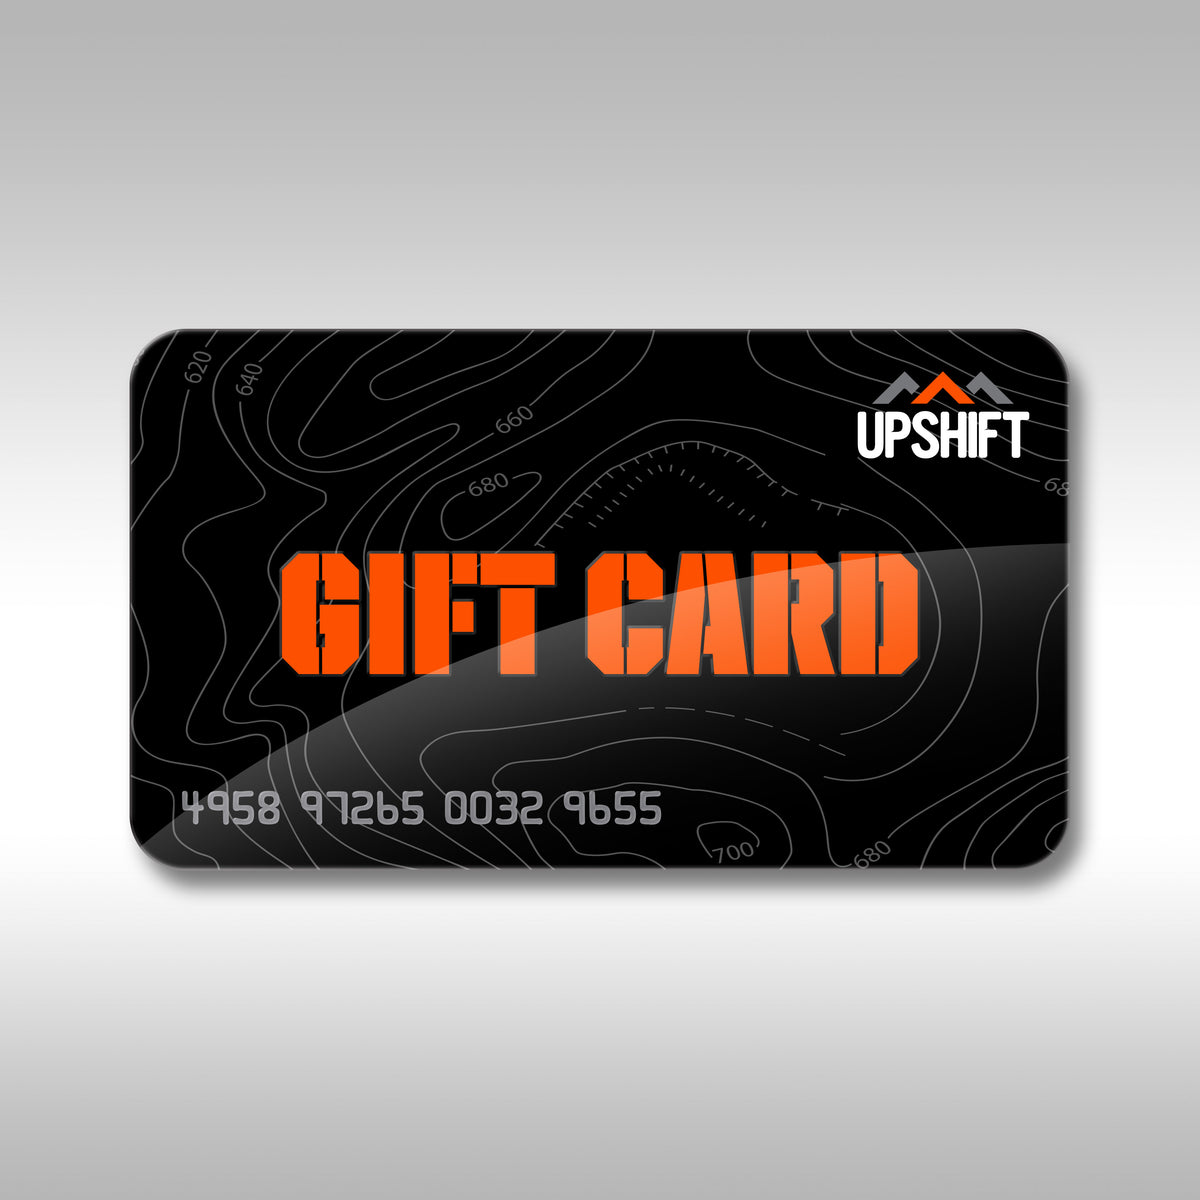 UPSHIFT GIFT CARD